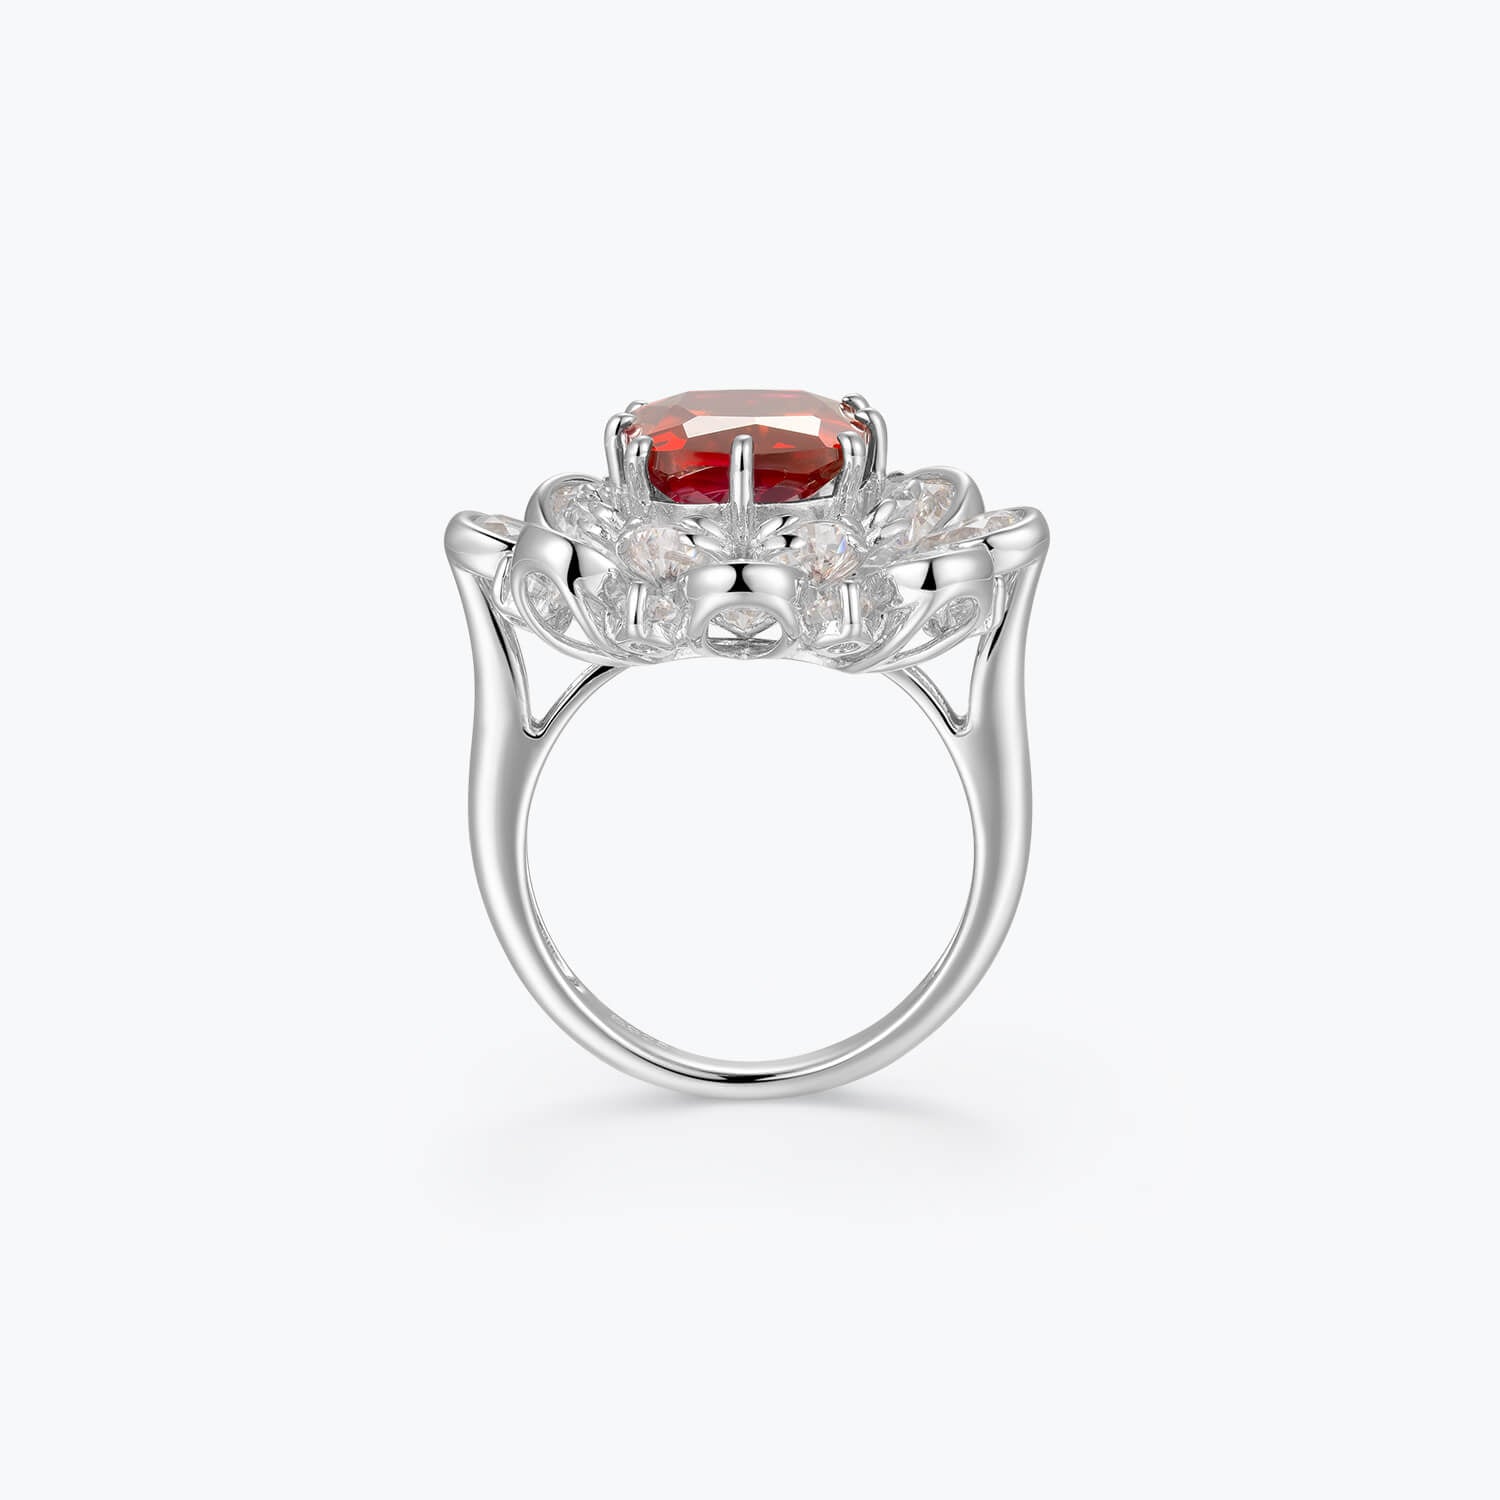 Ruby Red Rose Blossom Cushion Cut Ring - dissoojewelry